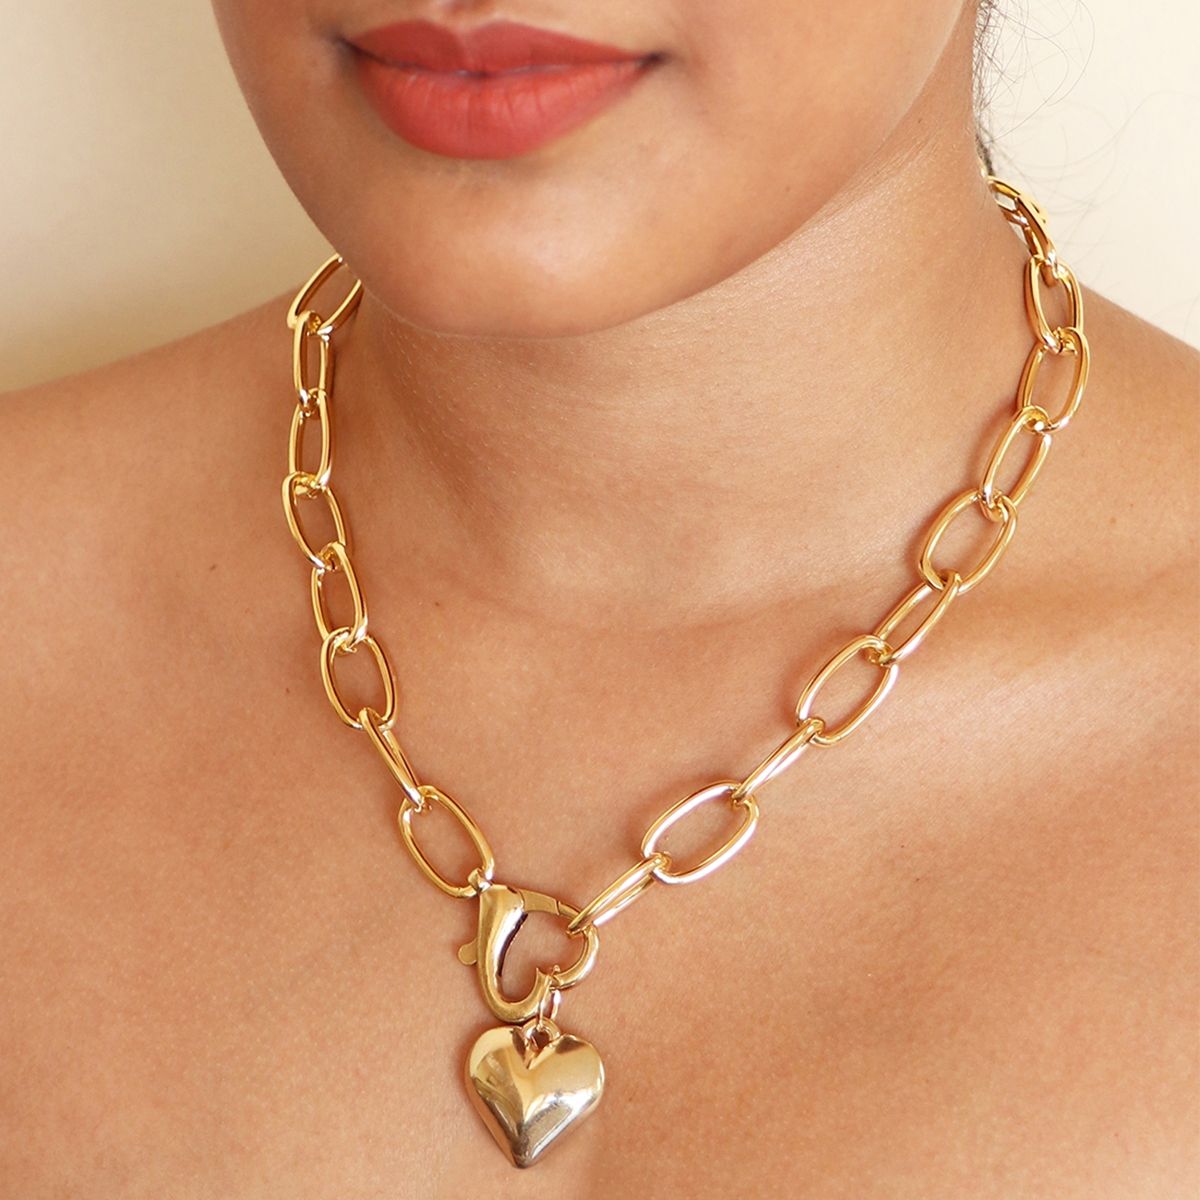 Chargances Key and Lock Necklace with Heart Pendant India | Ubuy